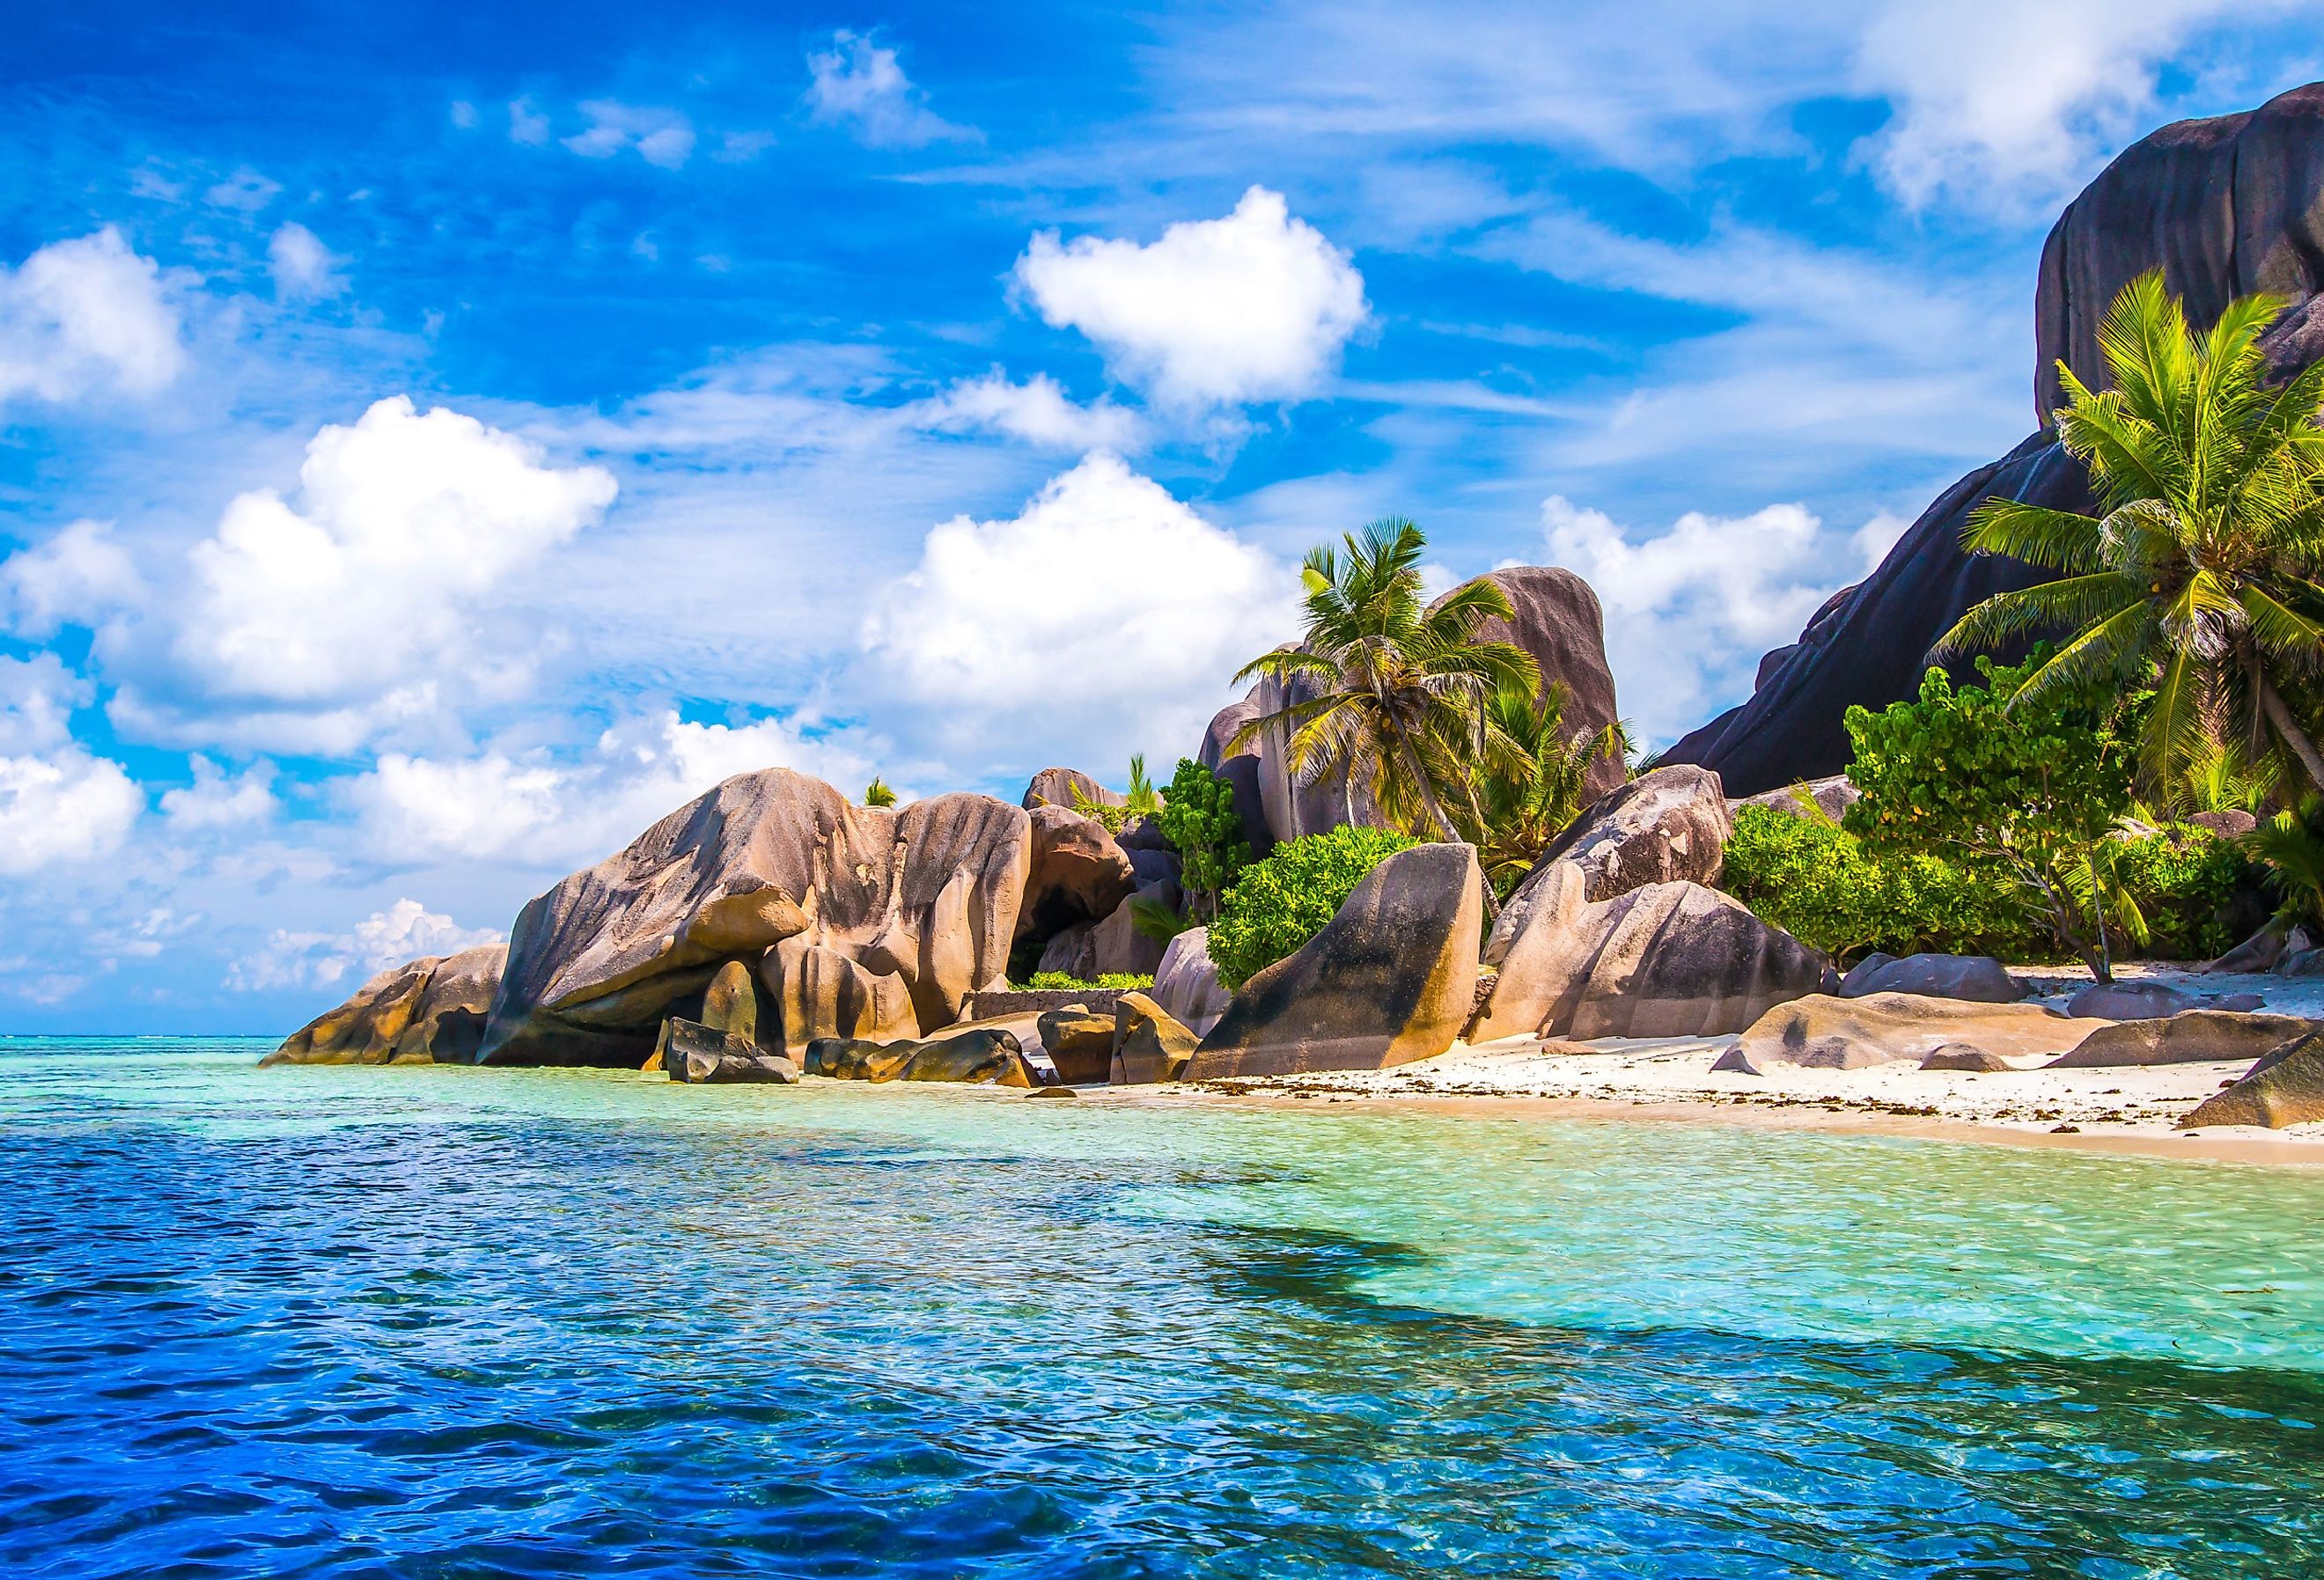 Source d'Argent at La Digue Island, Seychelles. Image credit: Zoltan.Benyei via Shutterstock